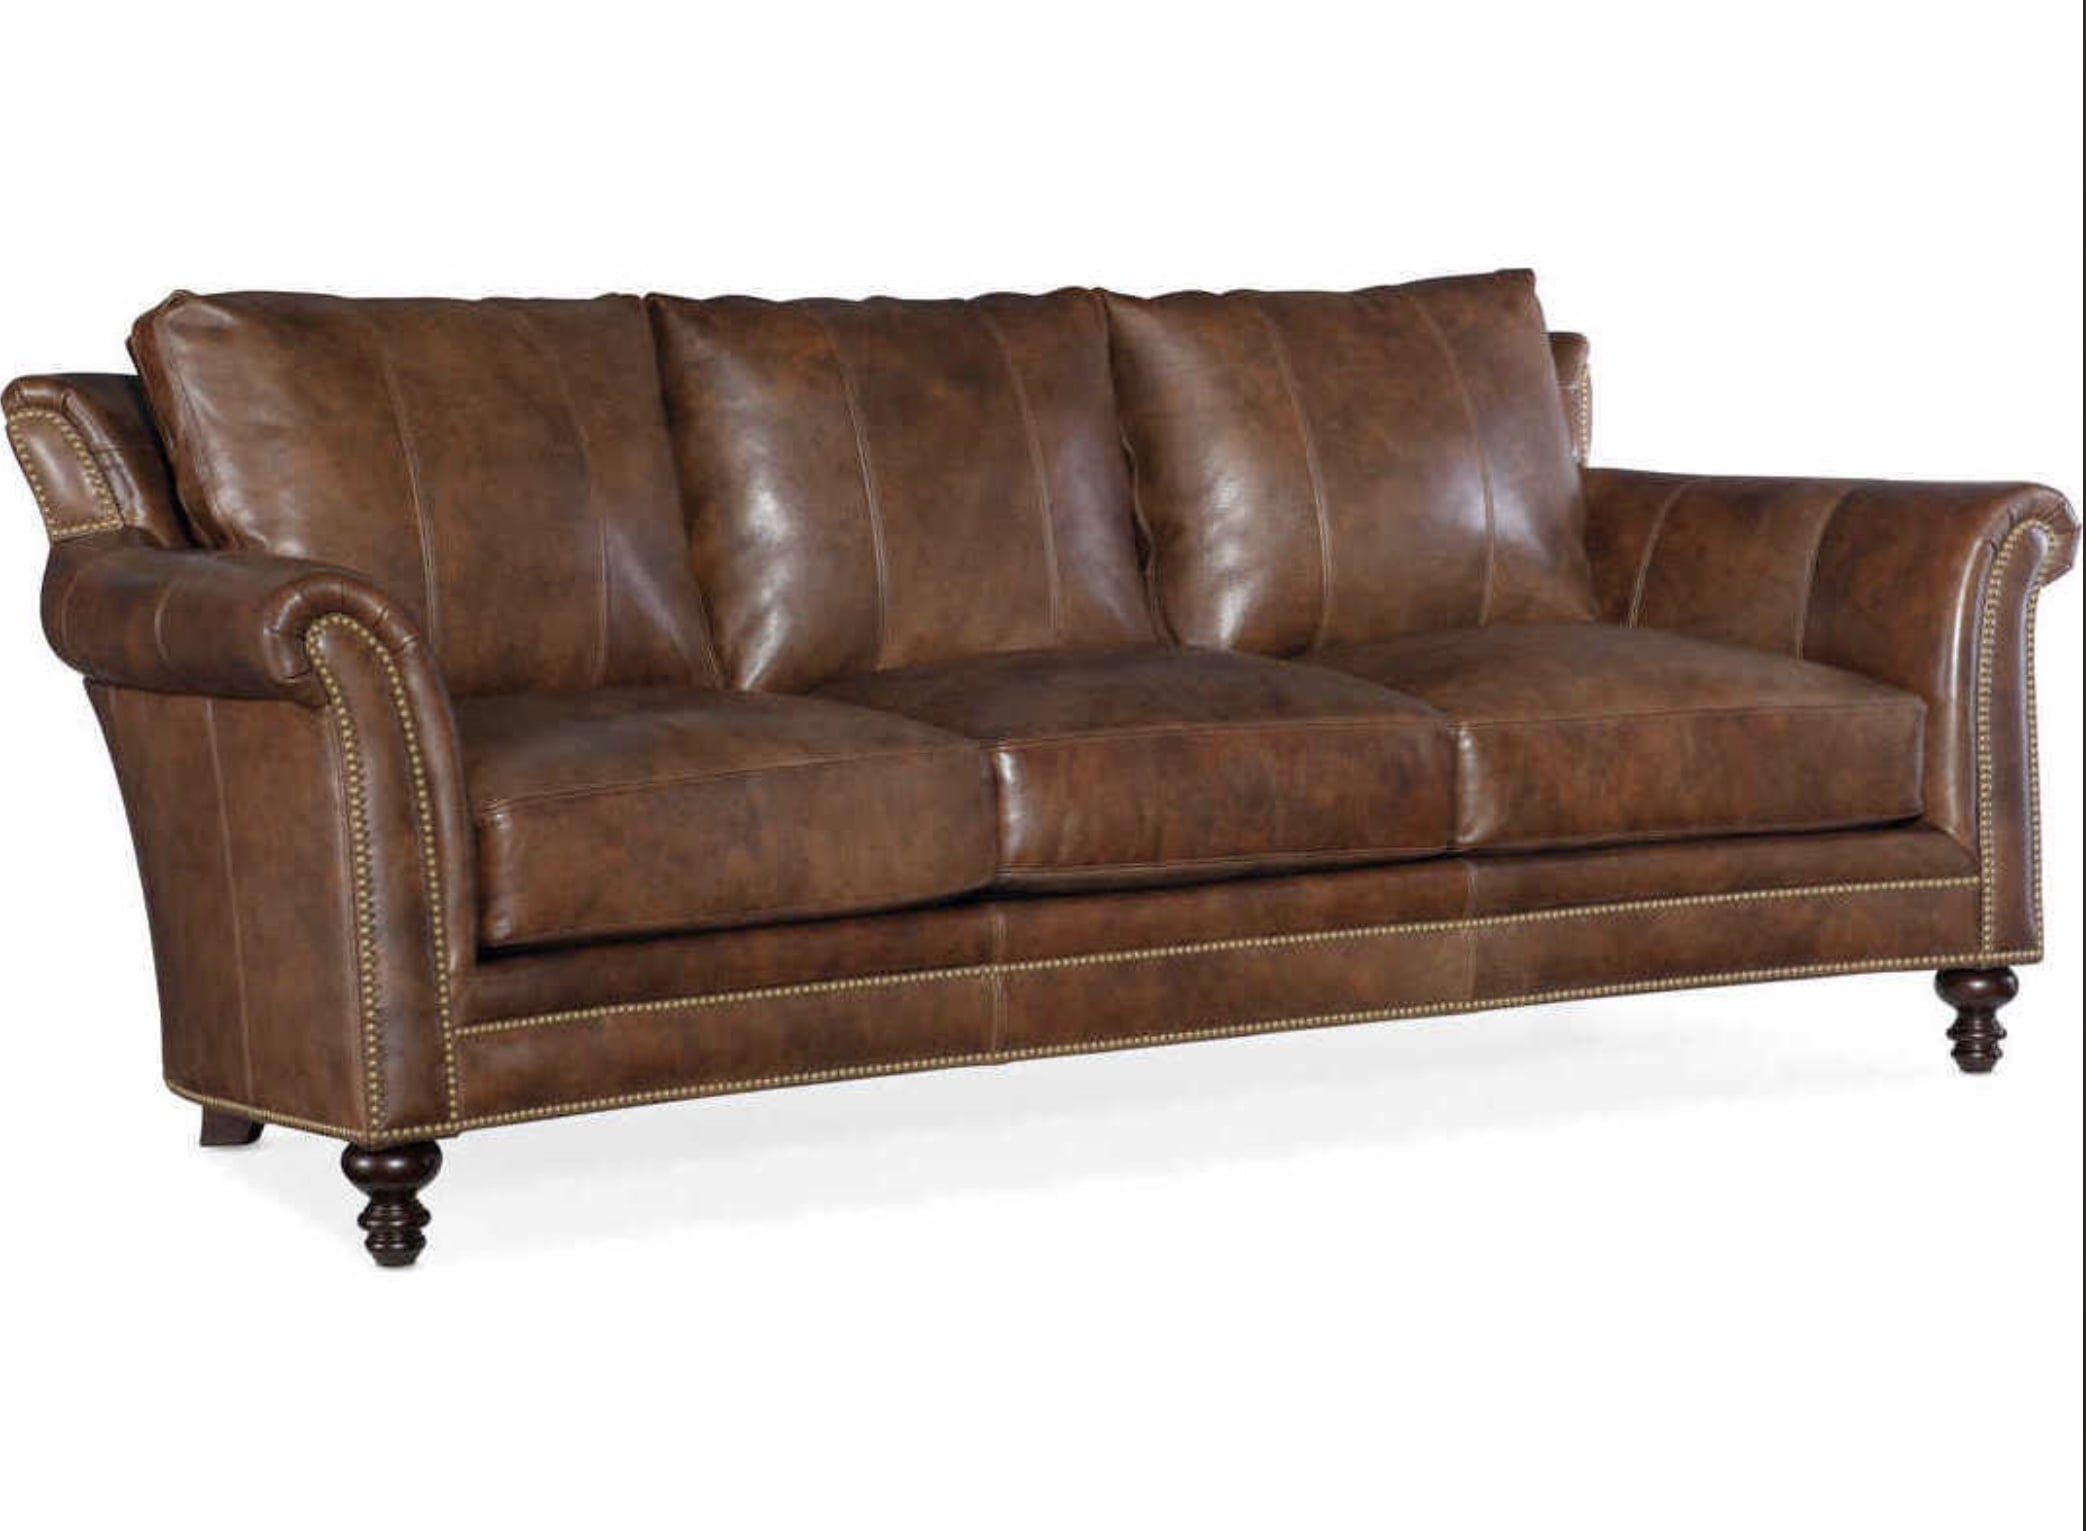 Made to Order Furniture. - Sofa 062-01